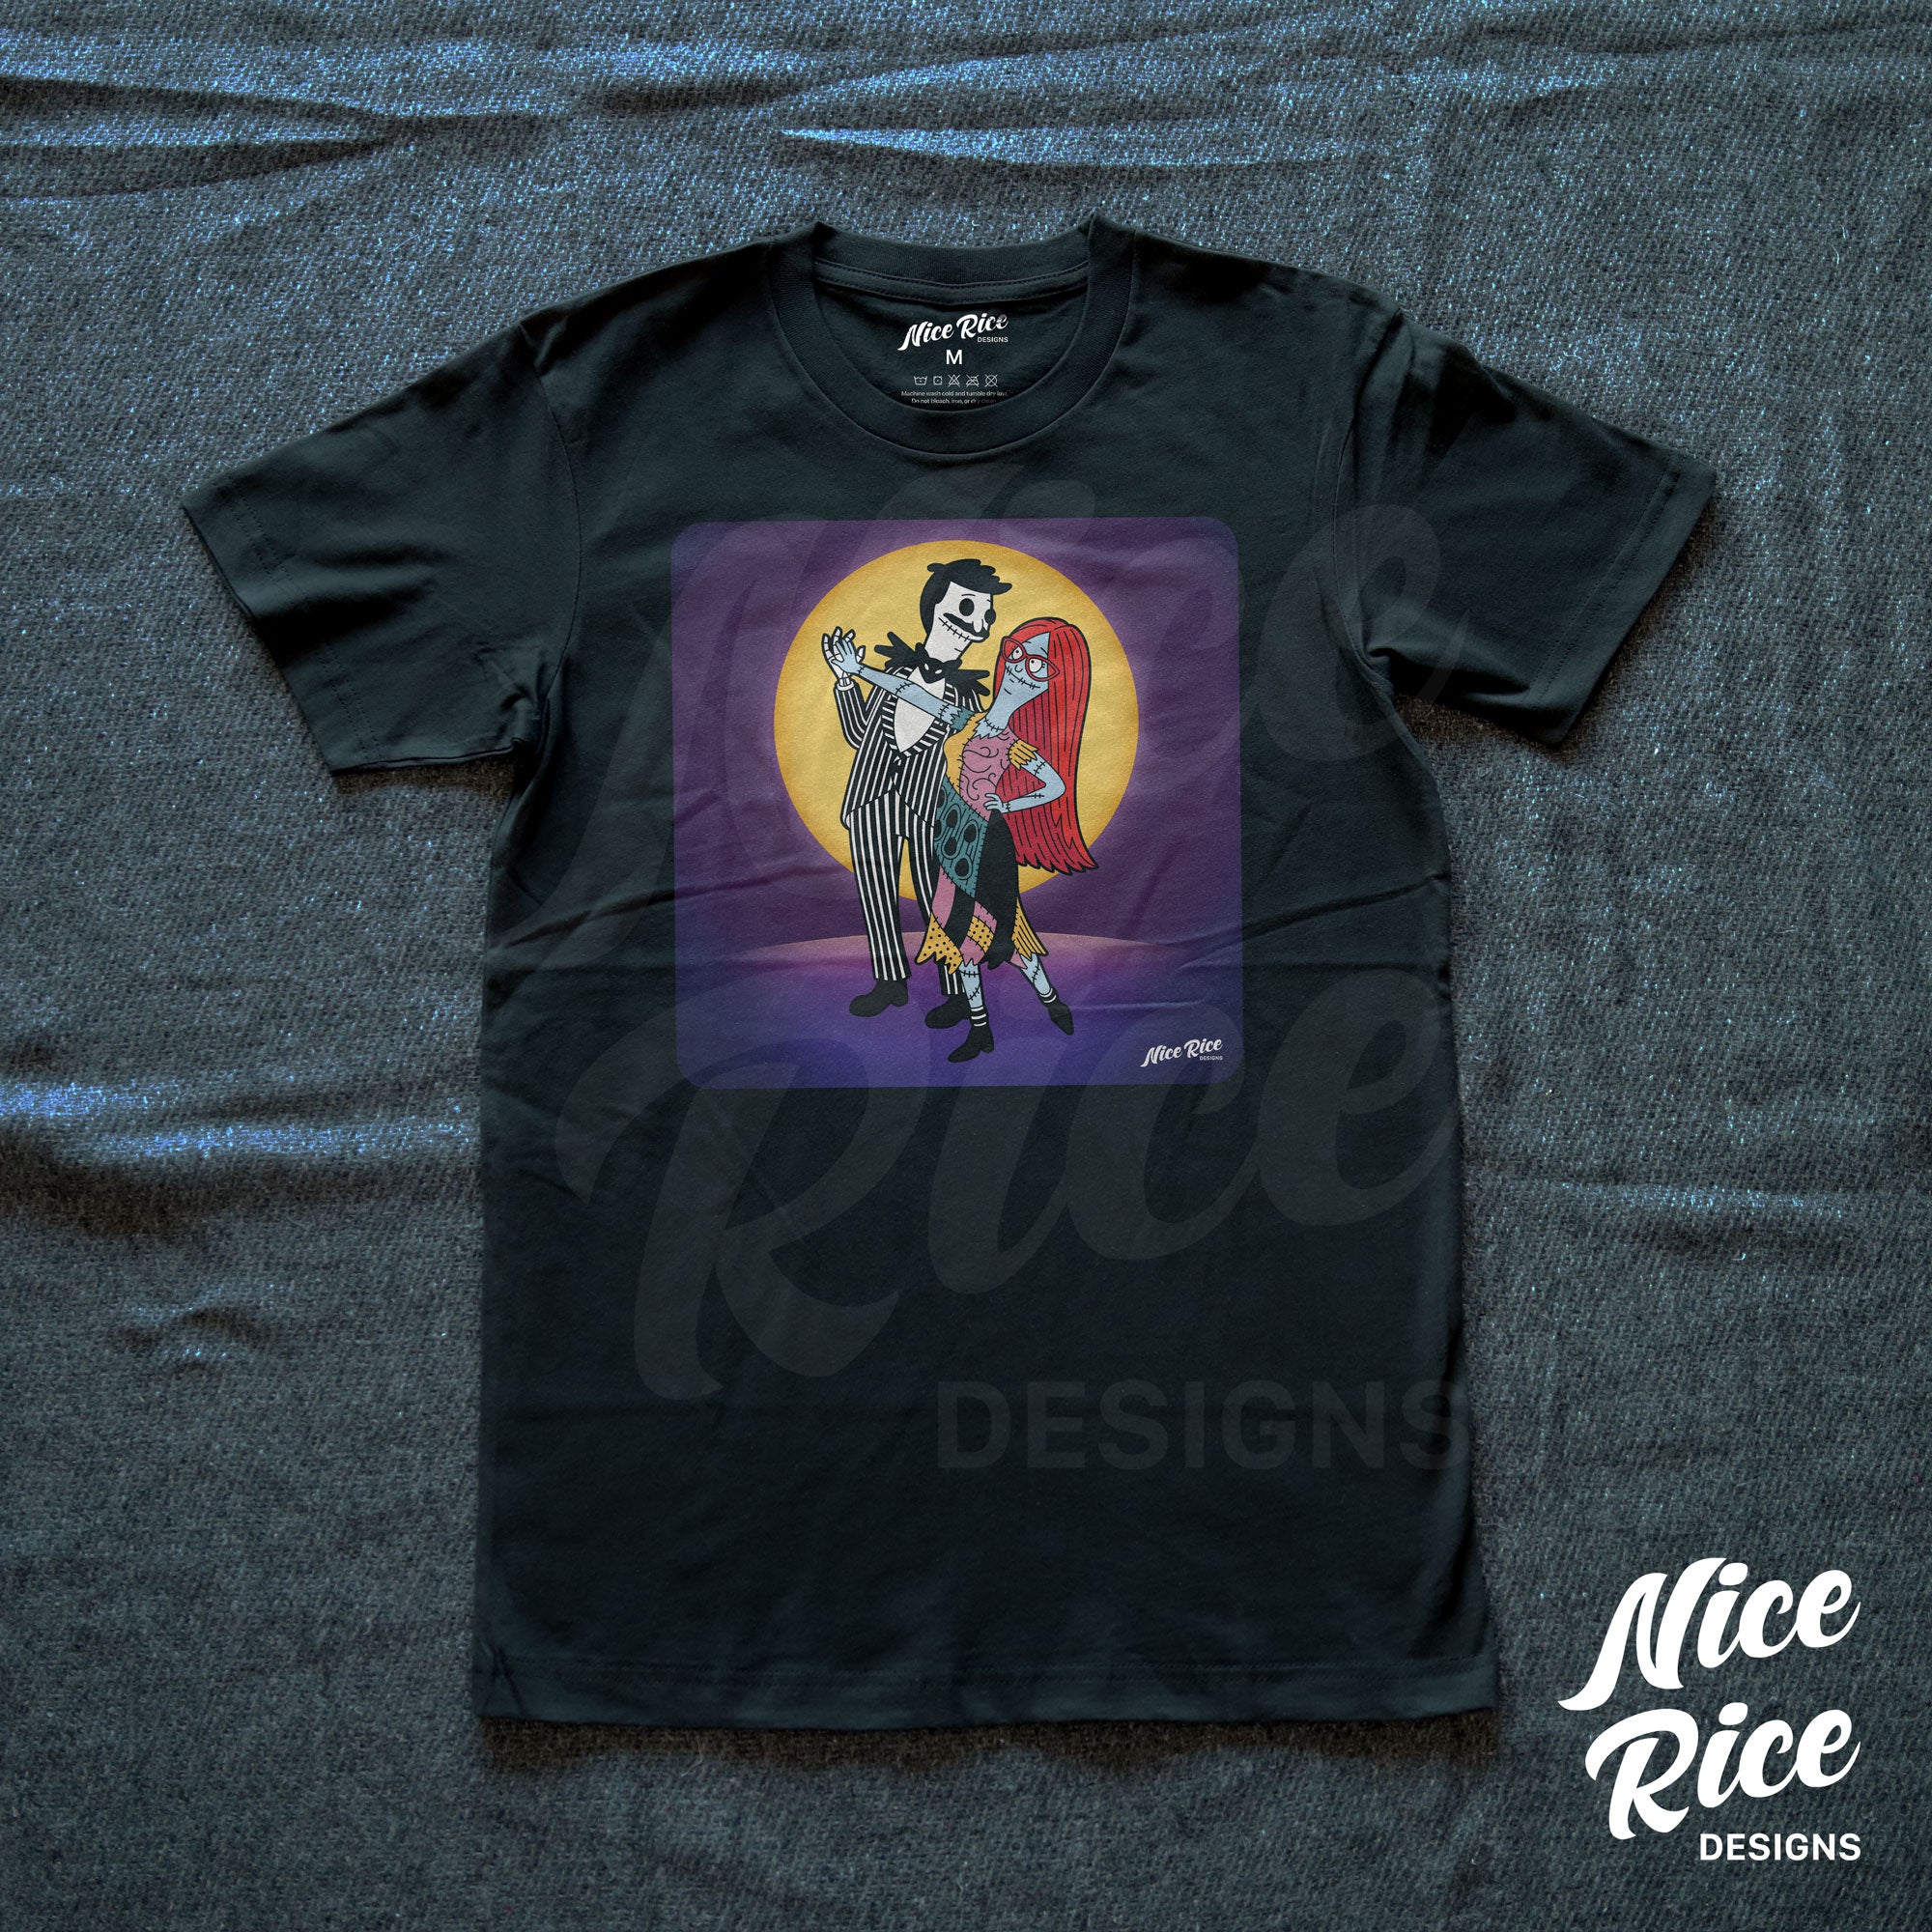 Nightmare Shirt by Nice Rice Designs